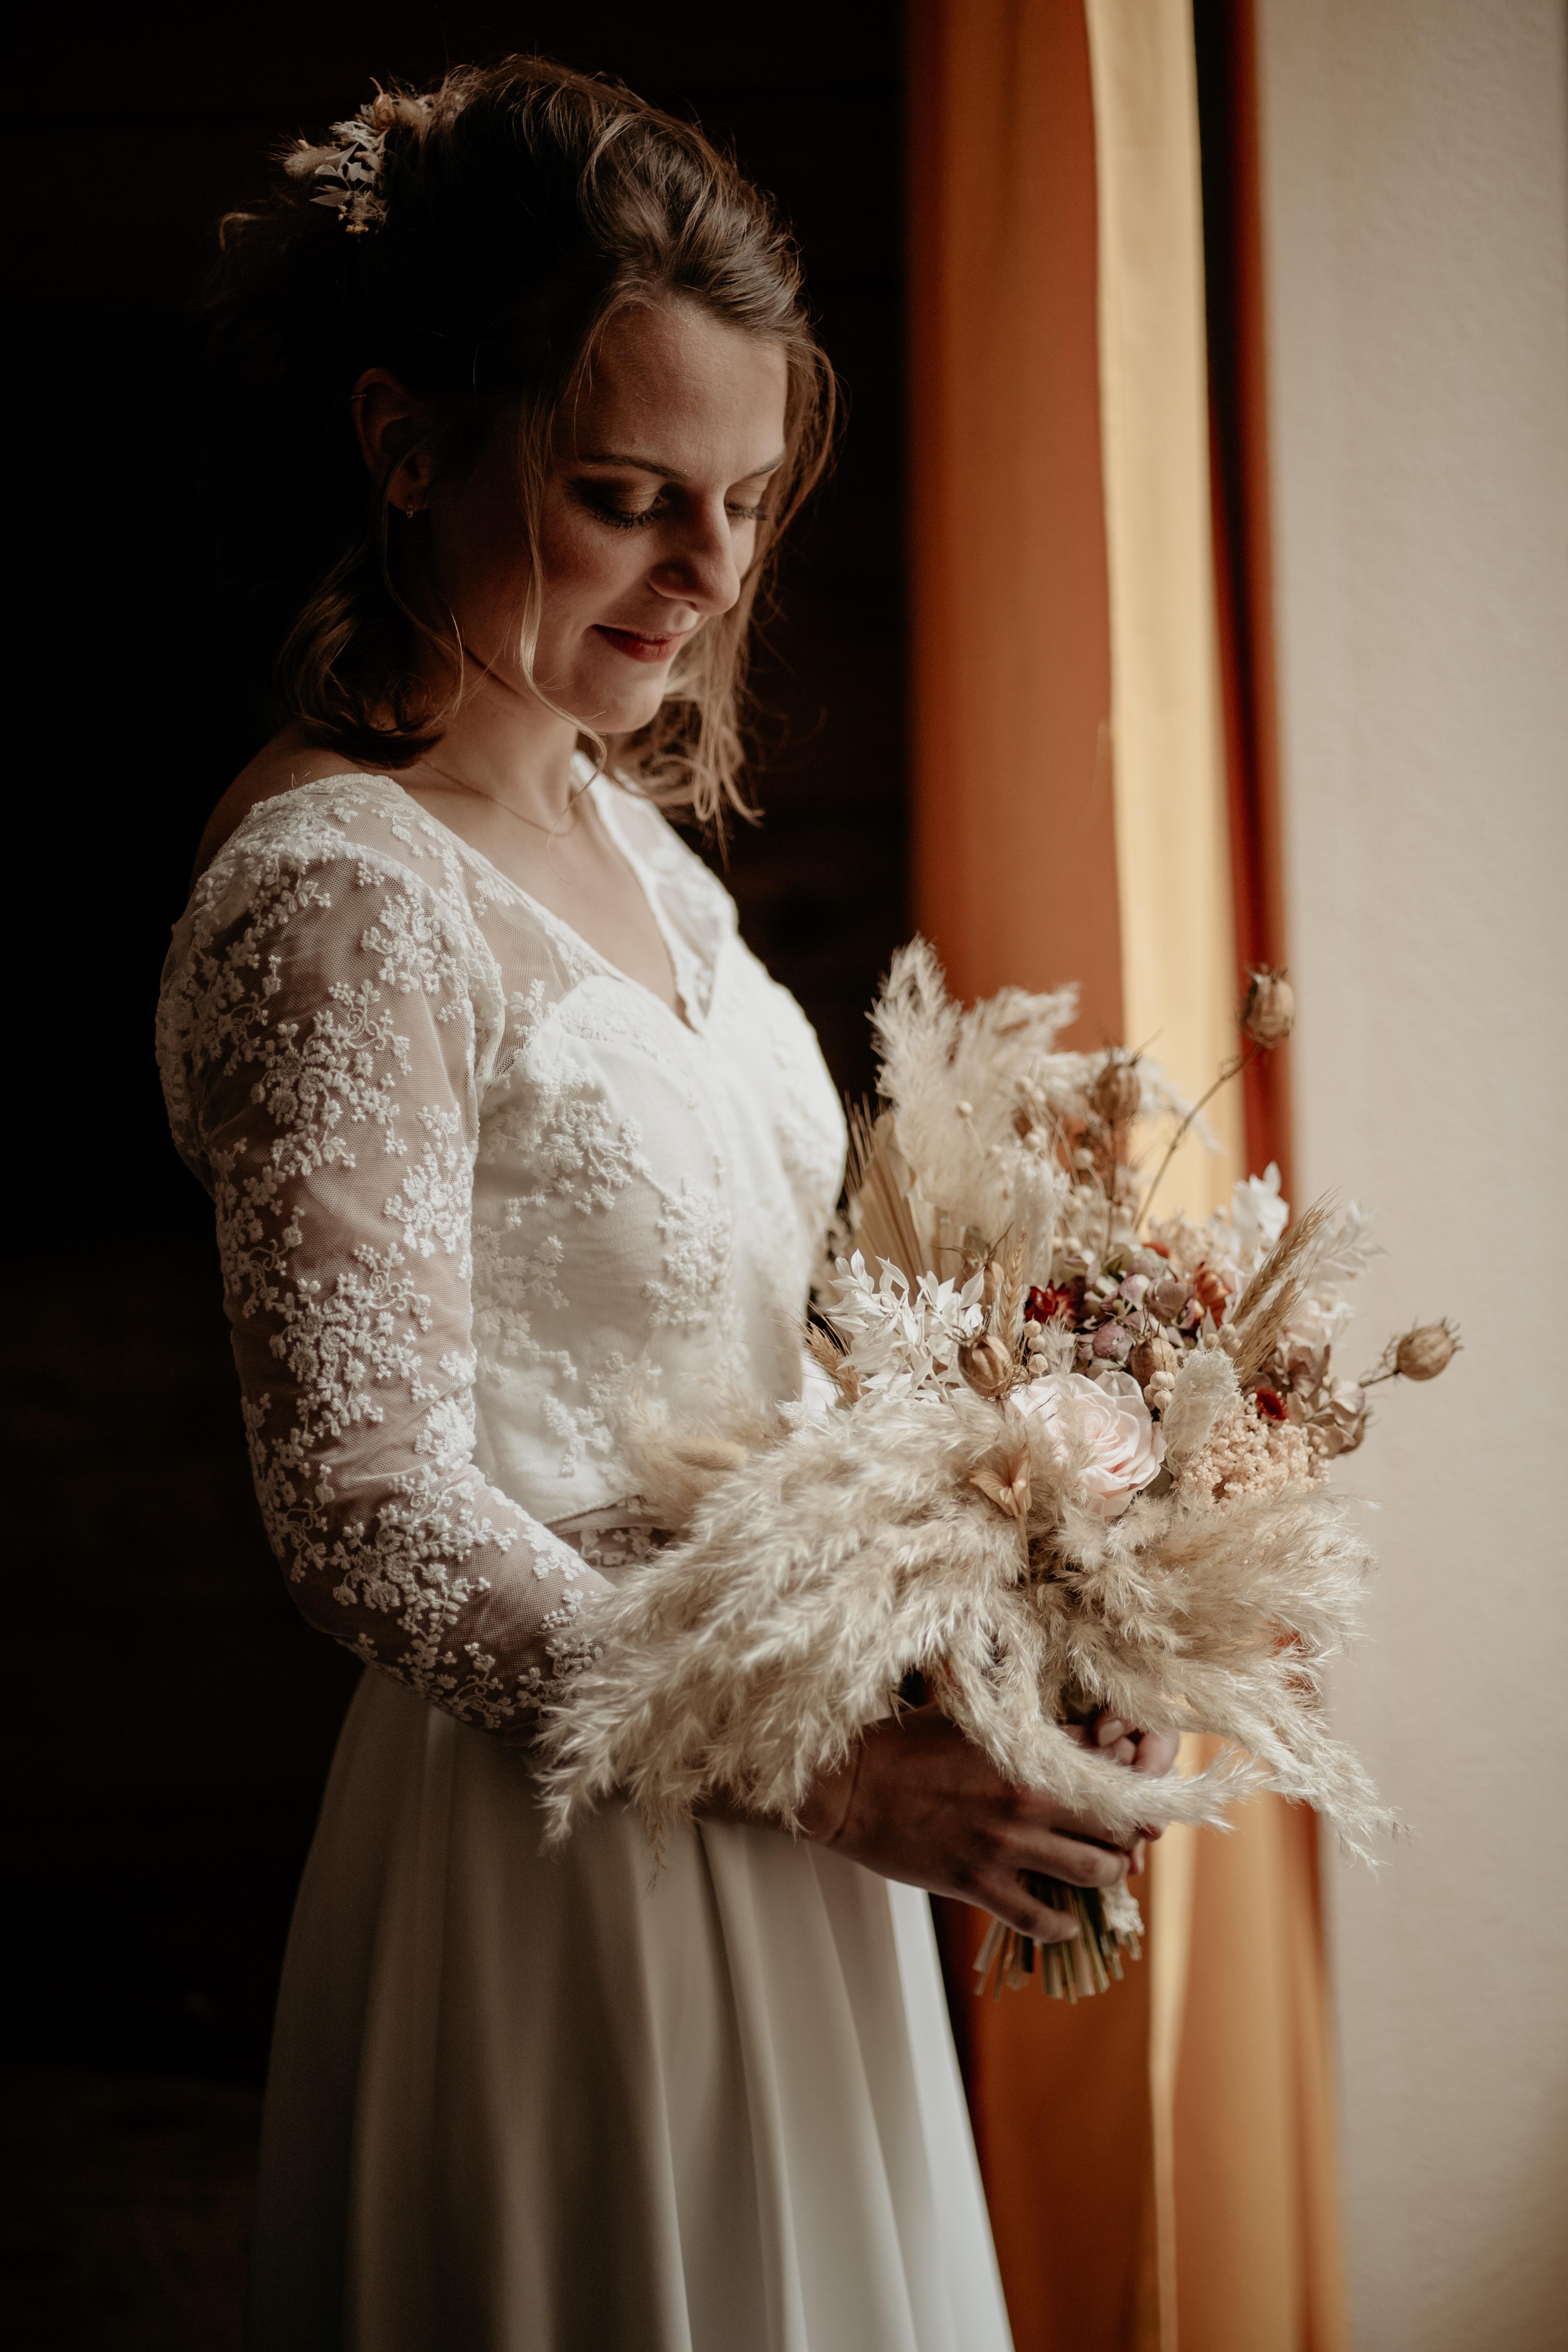 Ella Chatel, mise en beauté mariage. Photographe: Sylvana Ruggeri